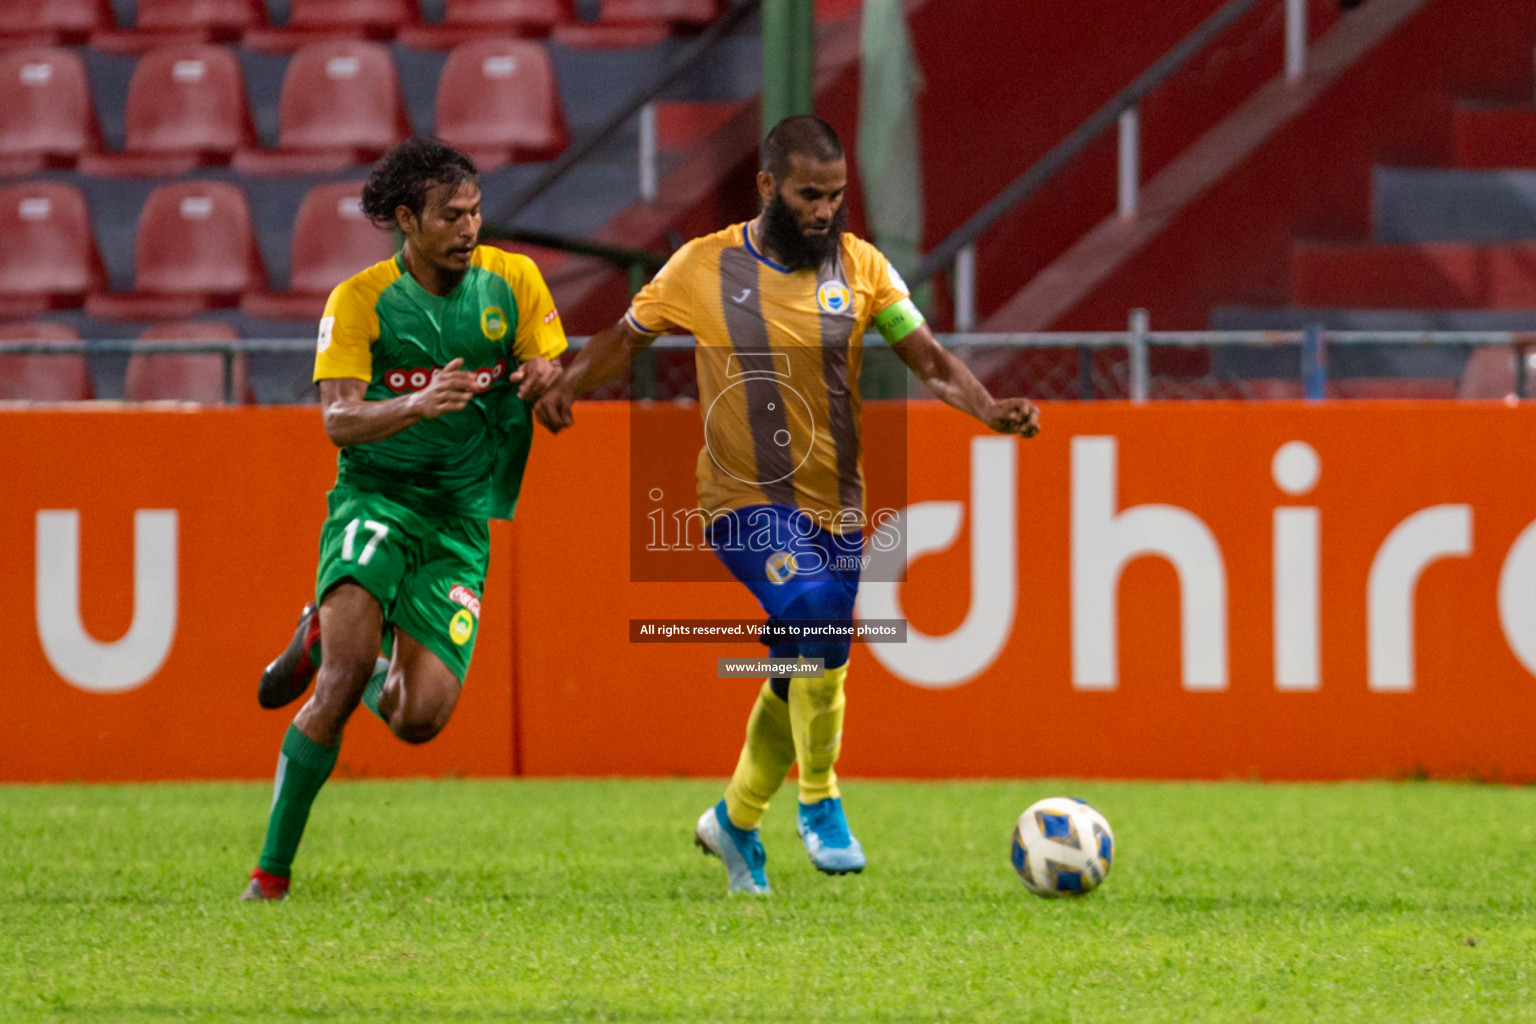 Club Valencia vs Maziya SRC in Dhiraagu Dhivehi Premier League 2020-21 on 26 December 2020 held in Male', Maldives